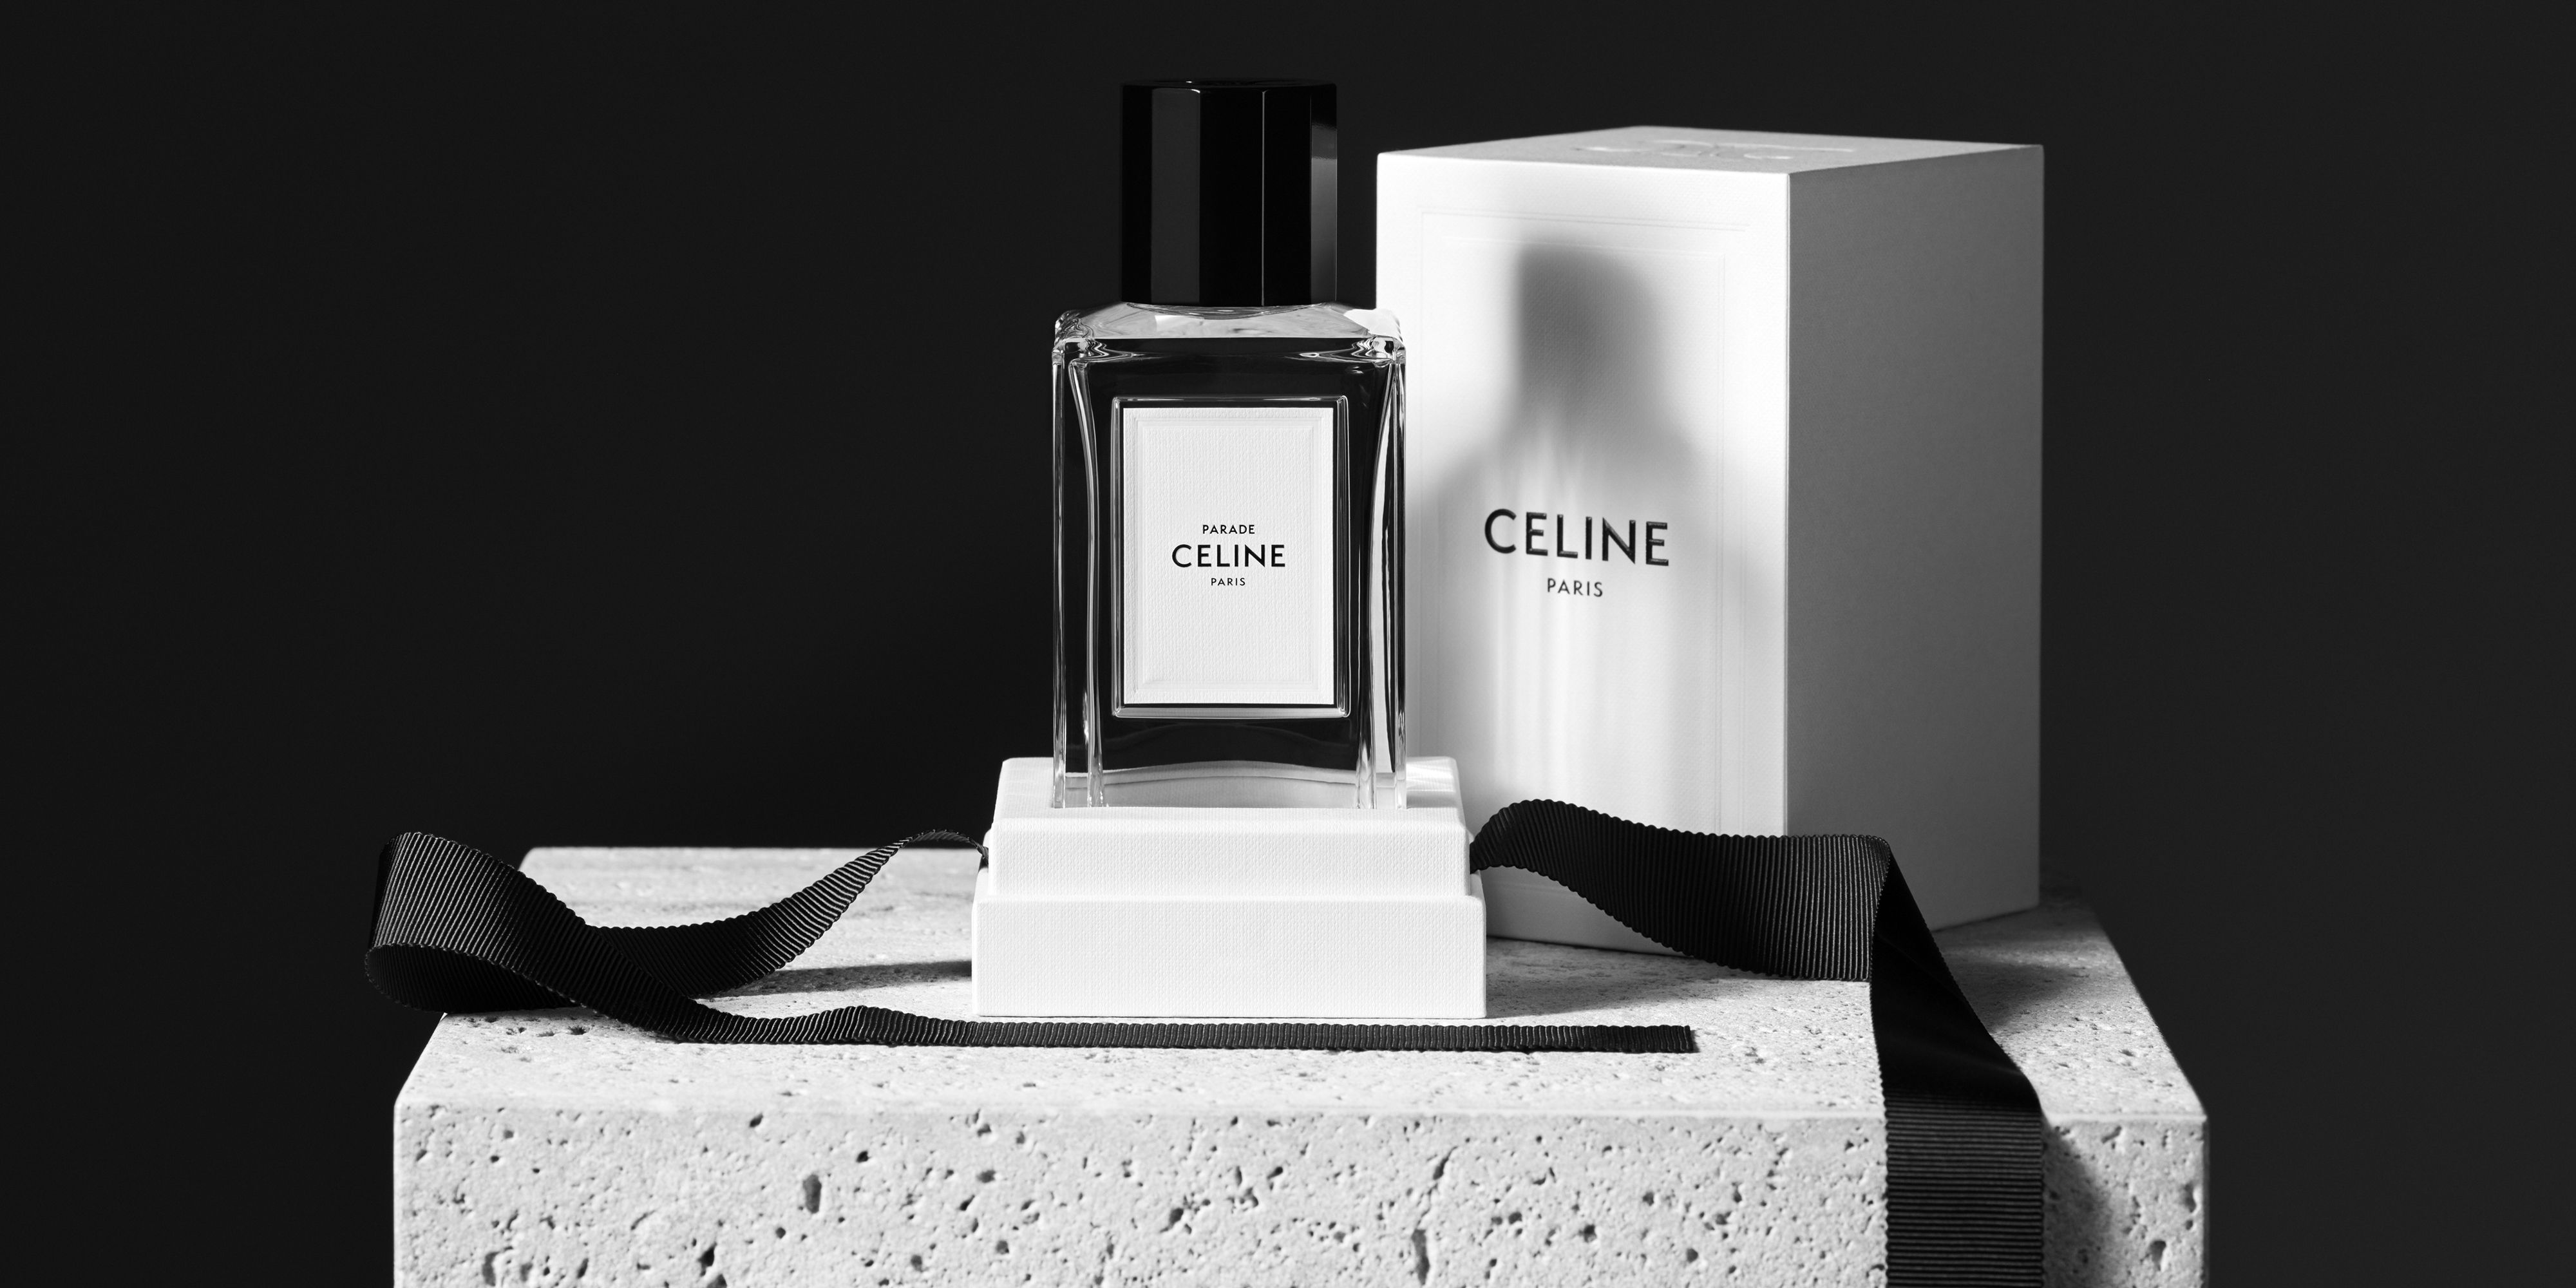 Celine fragrance collection - New Celine parfumerie in Paris